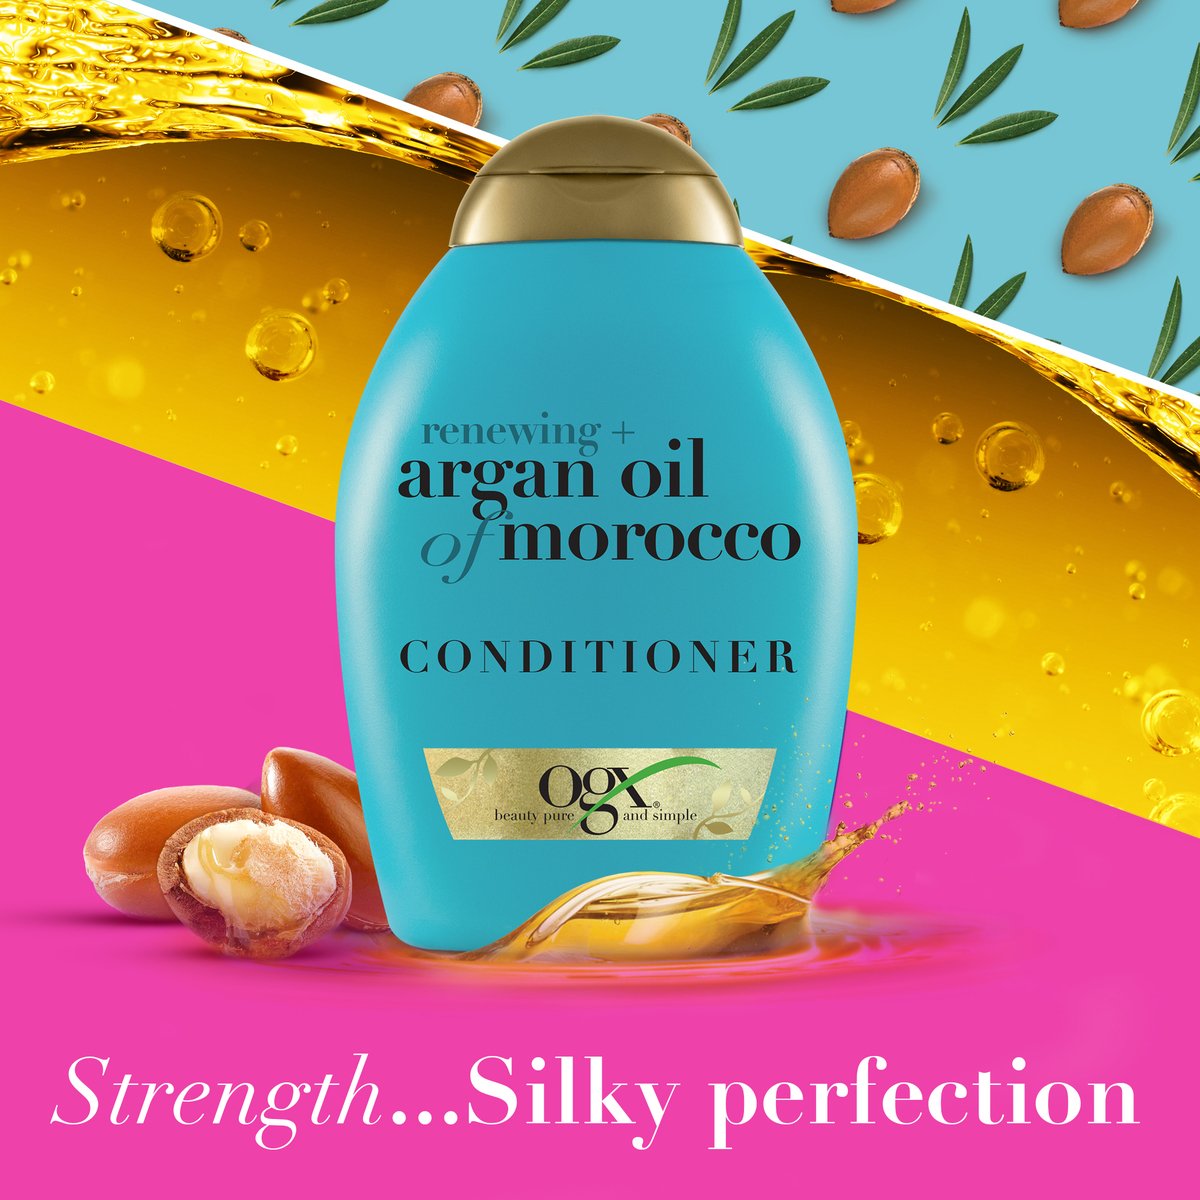 Ogx Conditioner Renewing + Argan Oil Of Morocco 385 ml